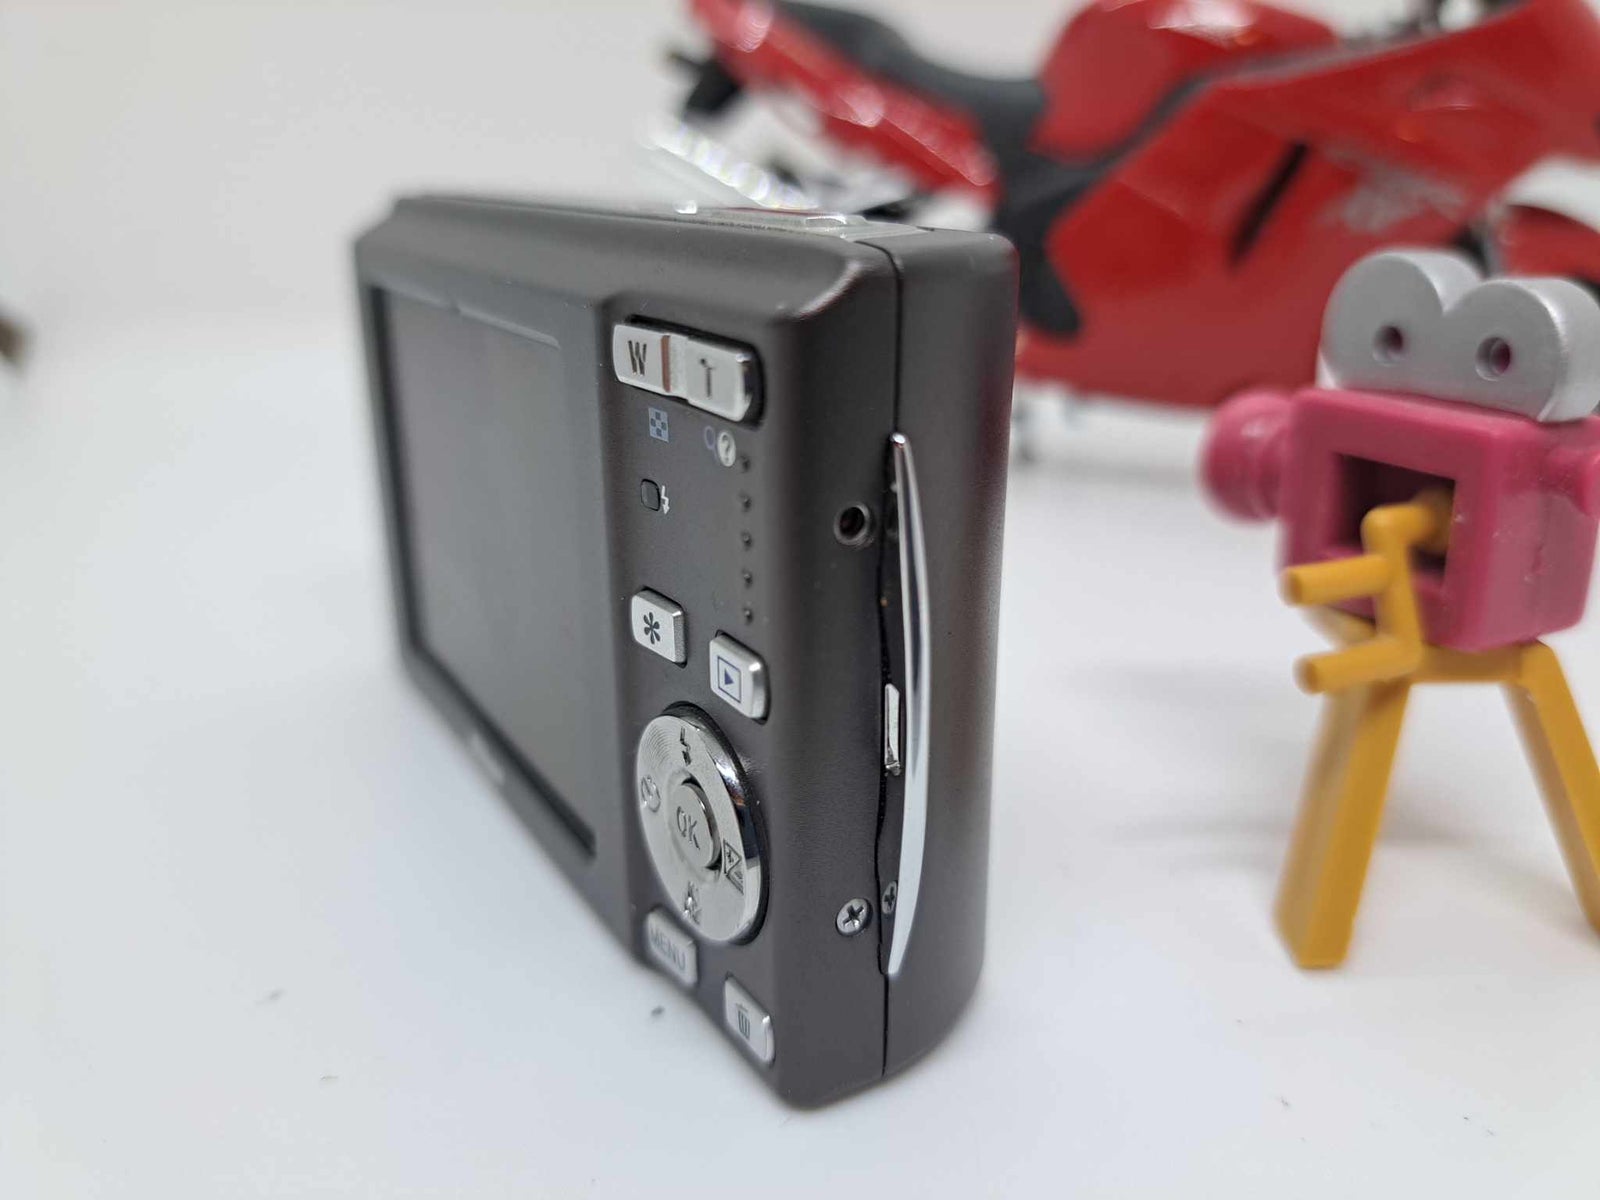 Nikon Coolpix S520, 8,1 megapixels, 3 x optisk zoom